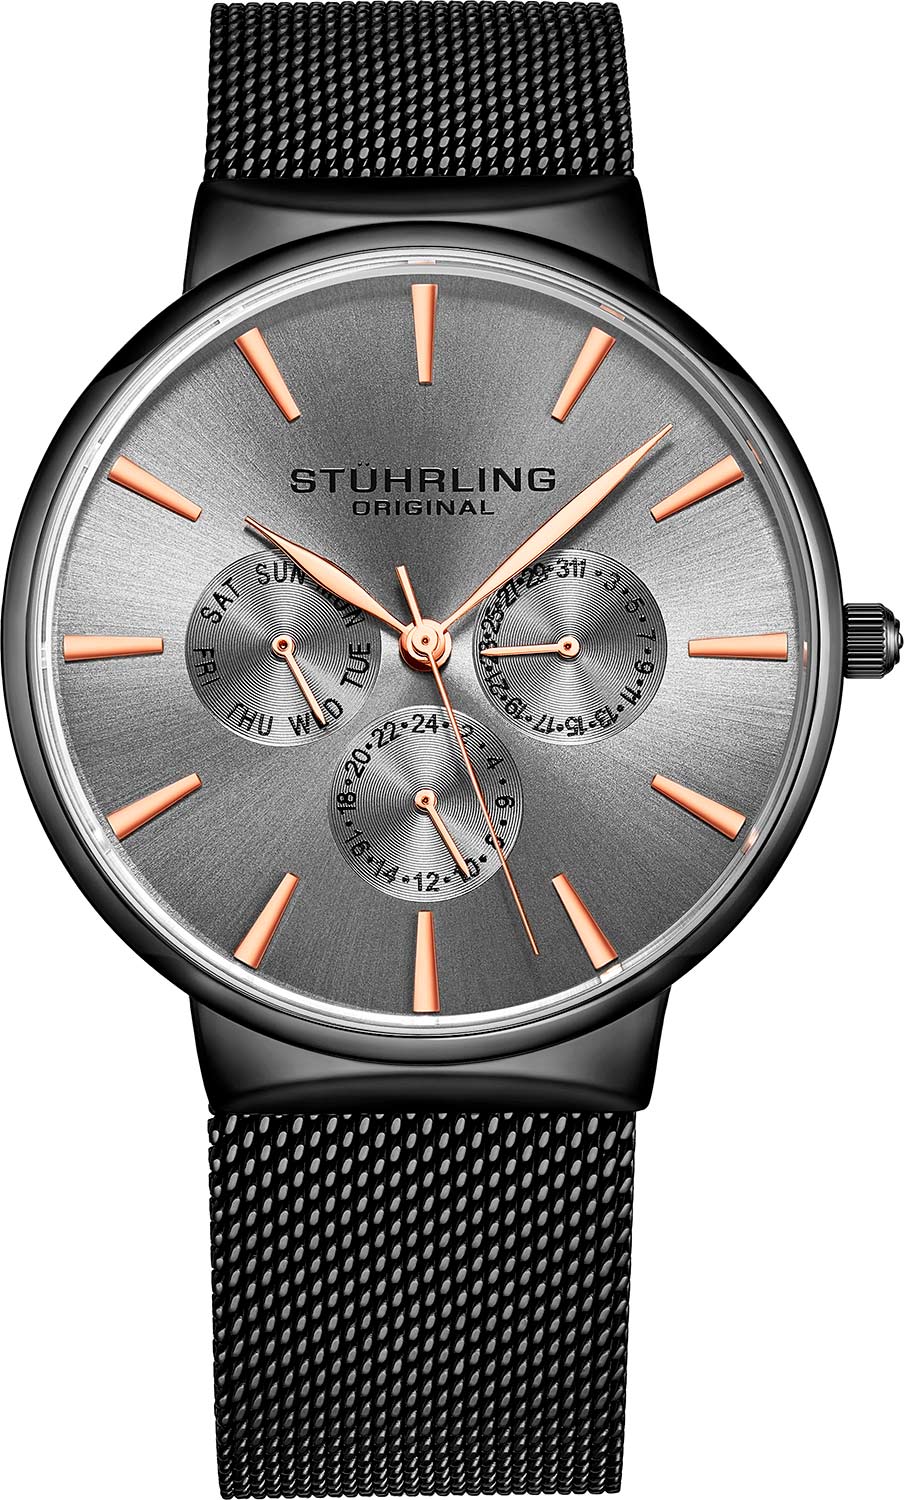   Stuhrling 3931.6